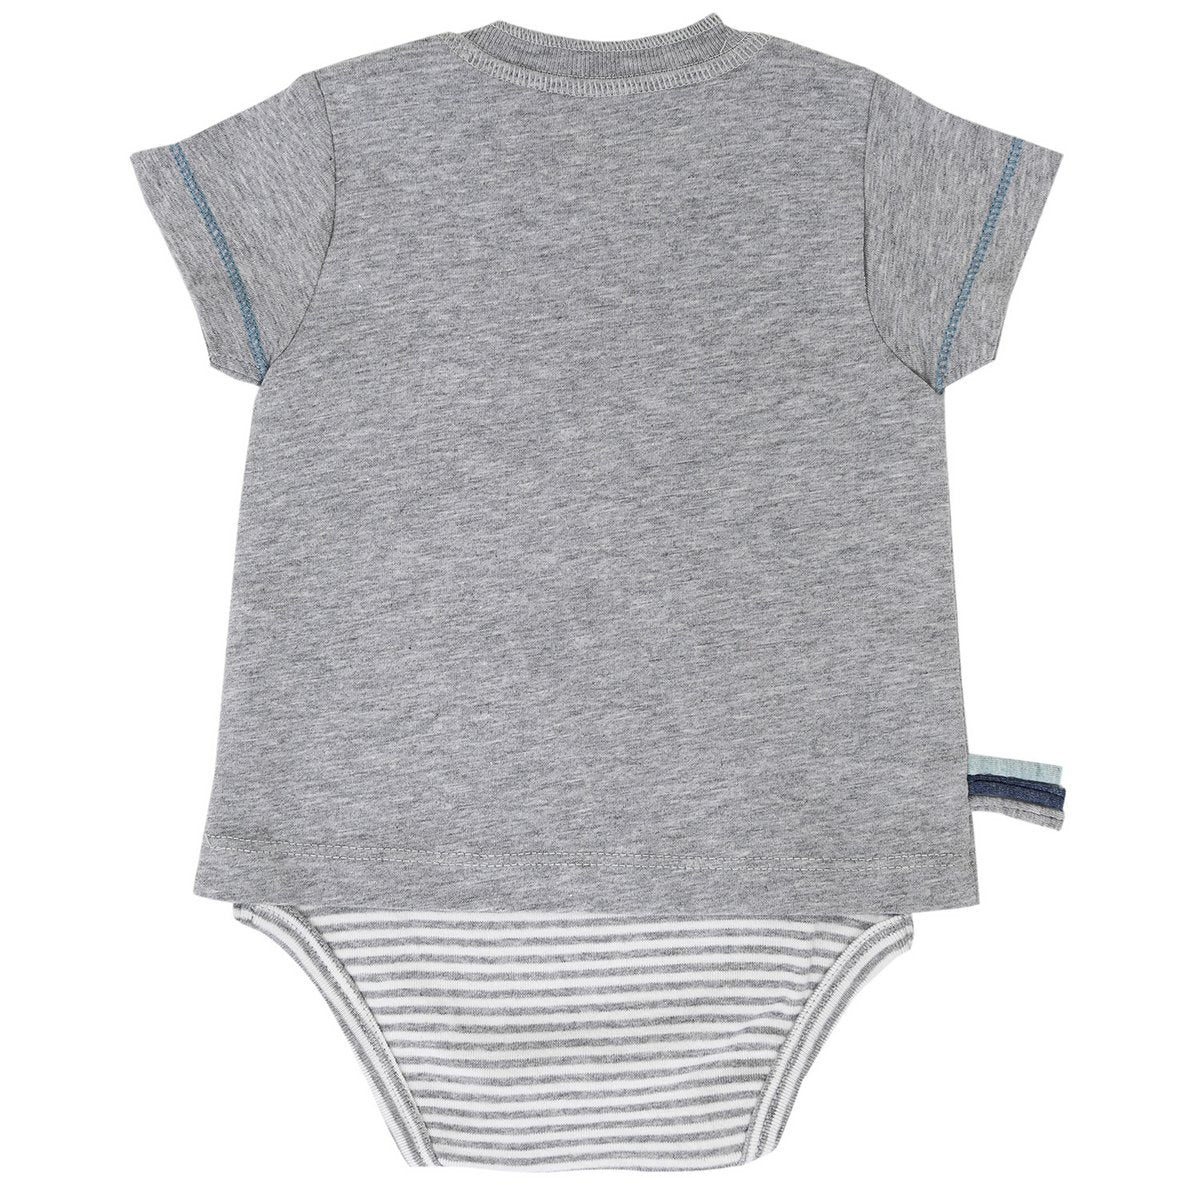 OrganicEra Organic Baby S/S T-Shirt-Body, Grau